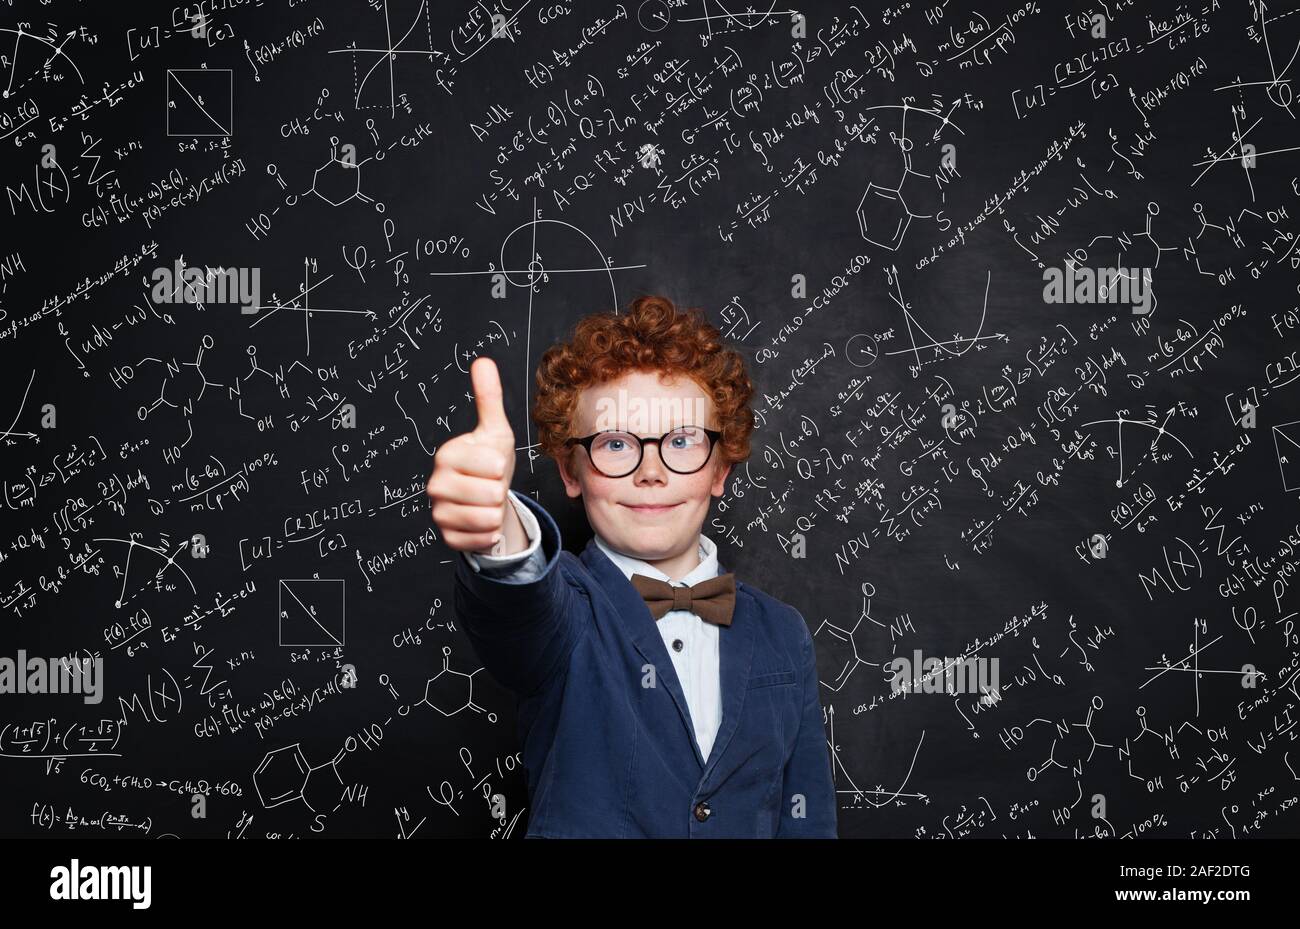 Kid student having fun on science background Stock Photo